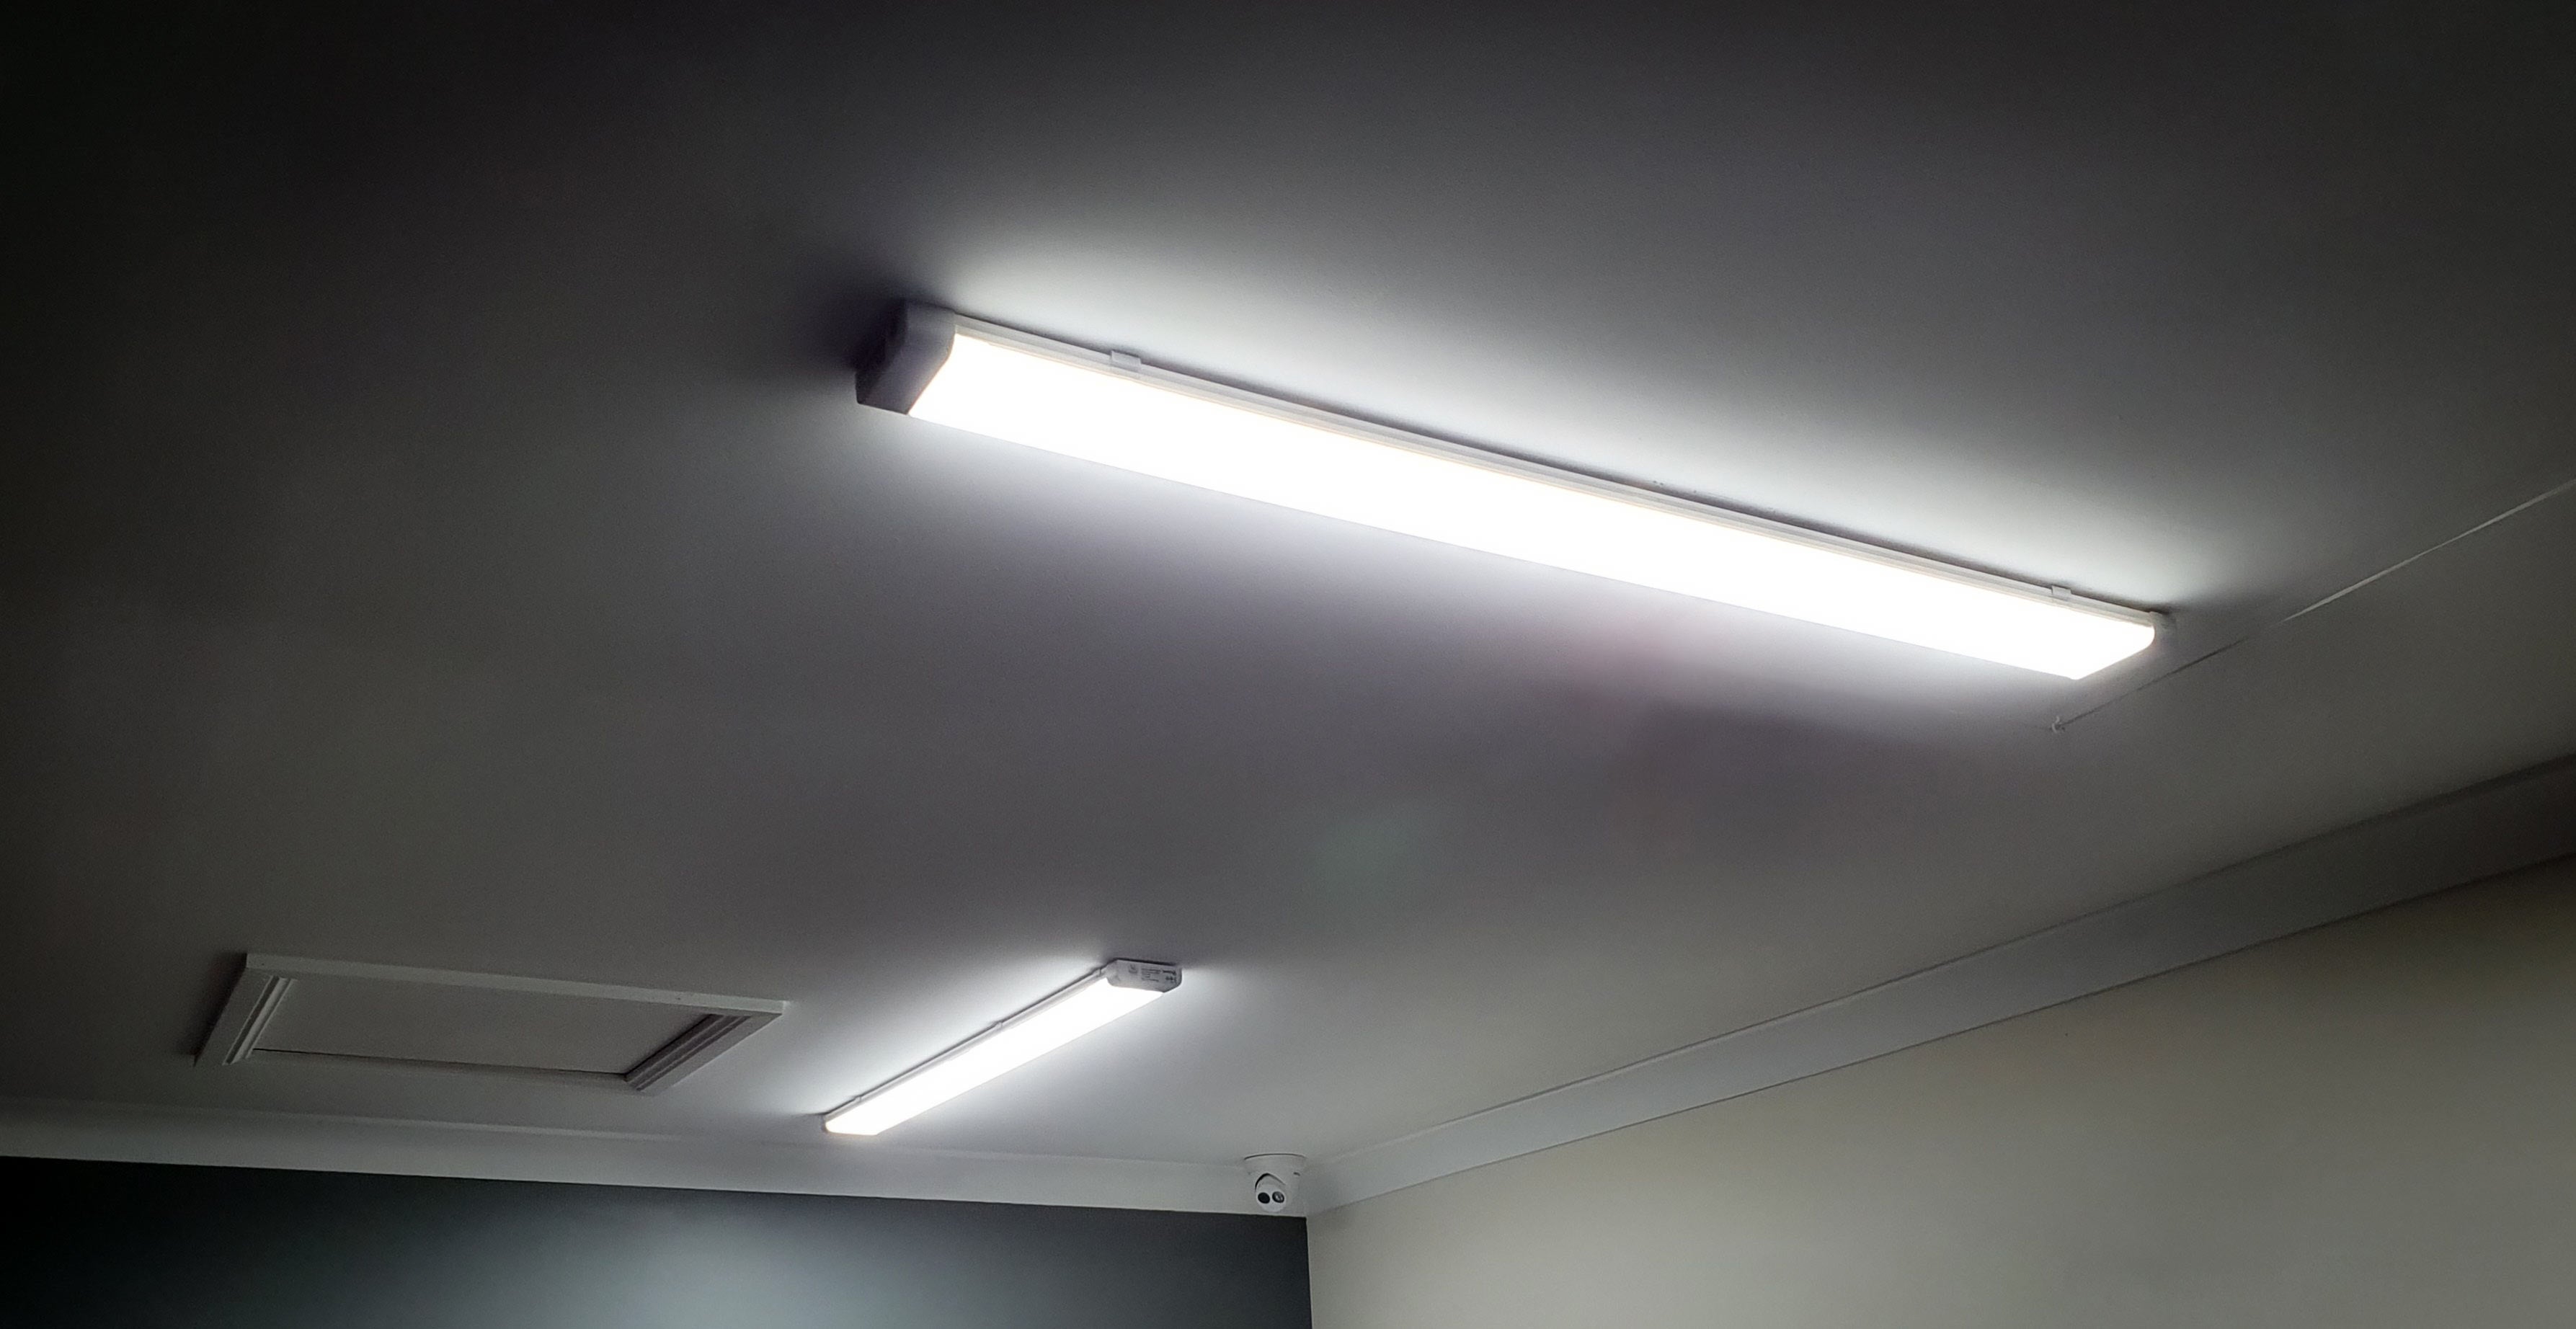 Buy LED Rectangular Work Light - High Power Wholesale & Retail